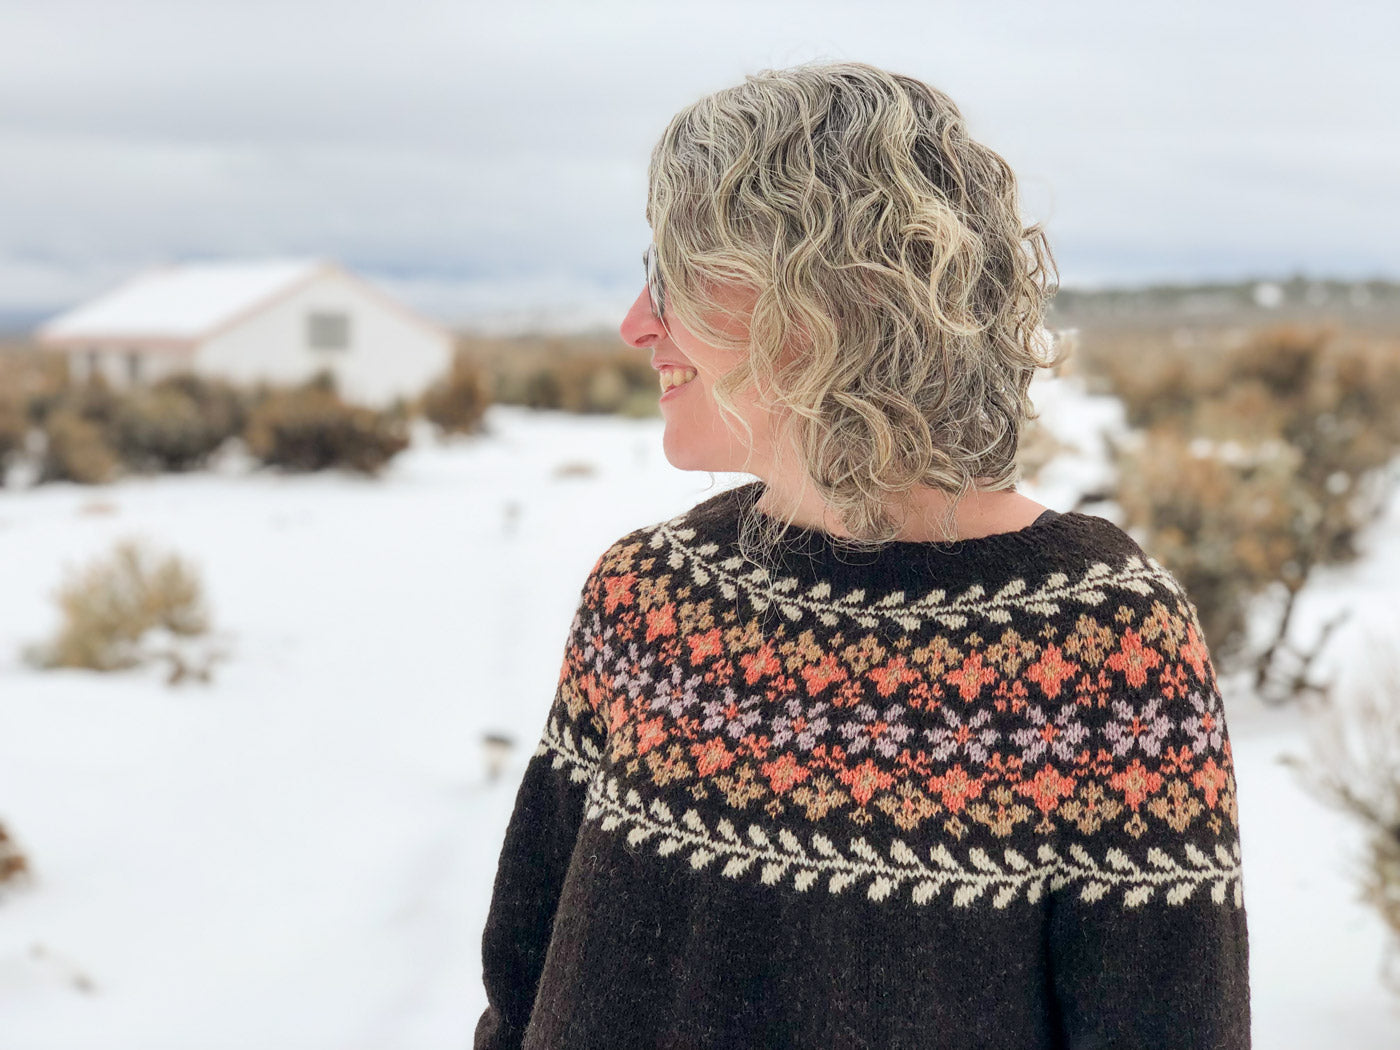 Jaime in the snowy plains wearing her Birkin Sweater